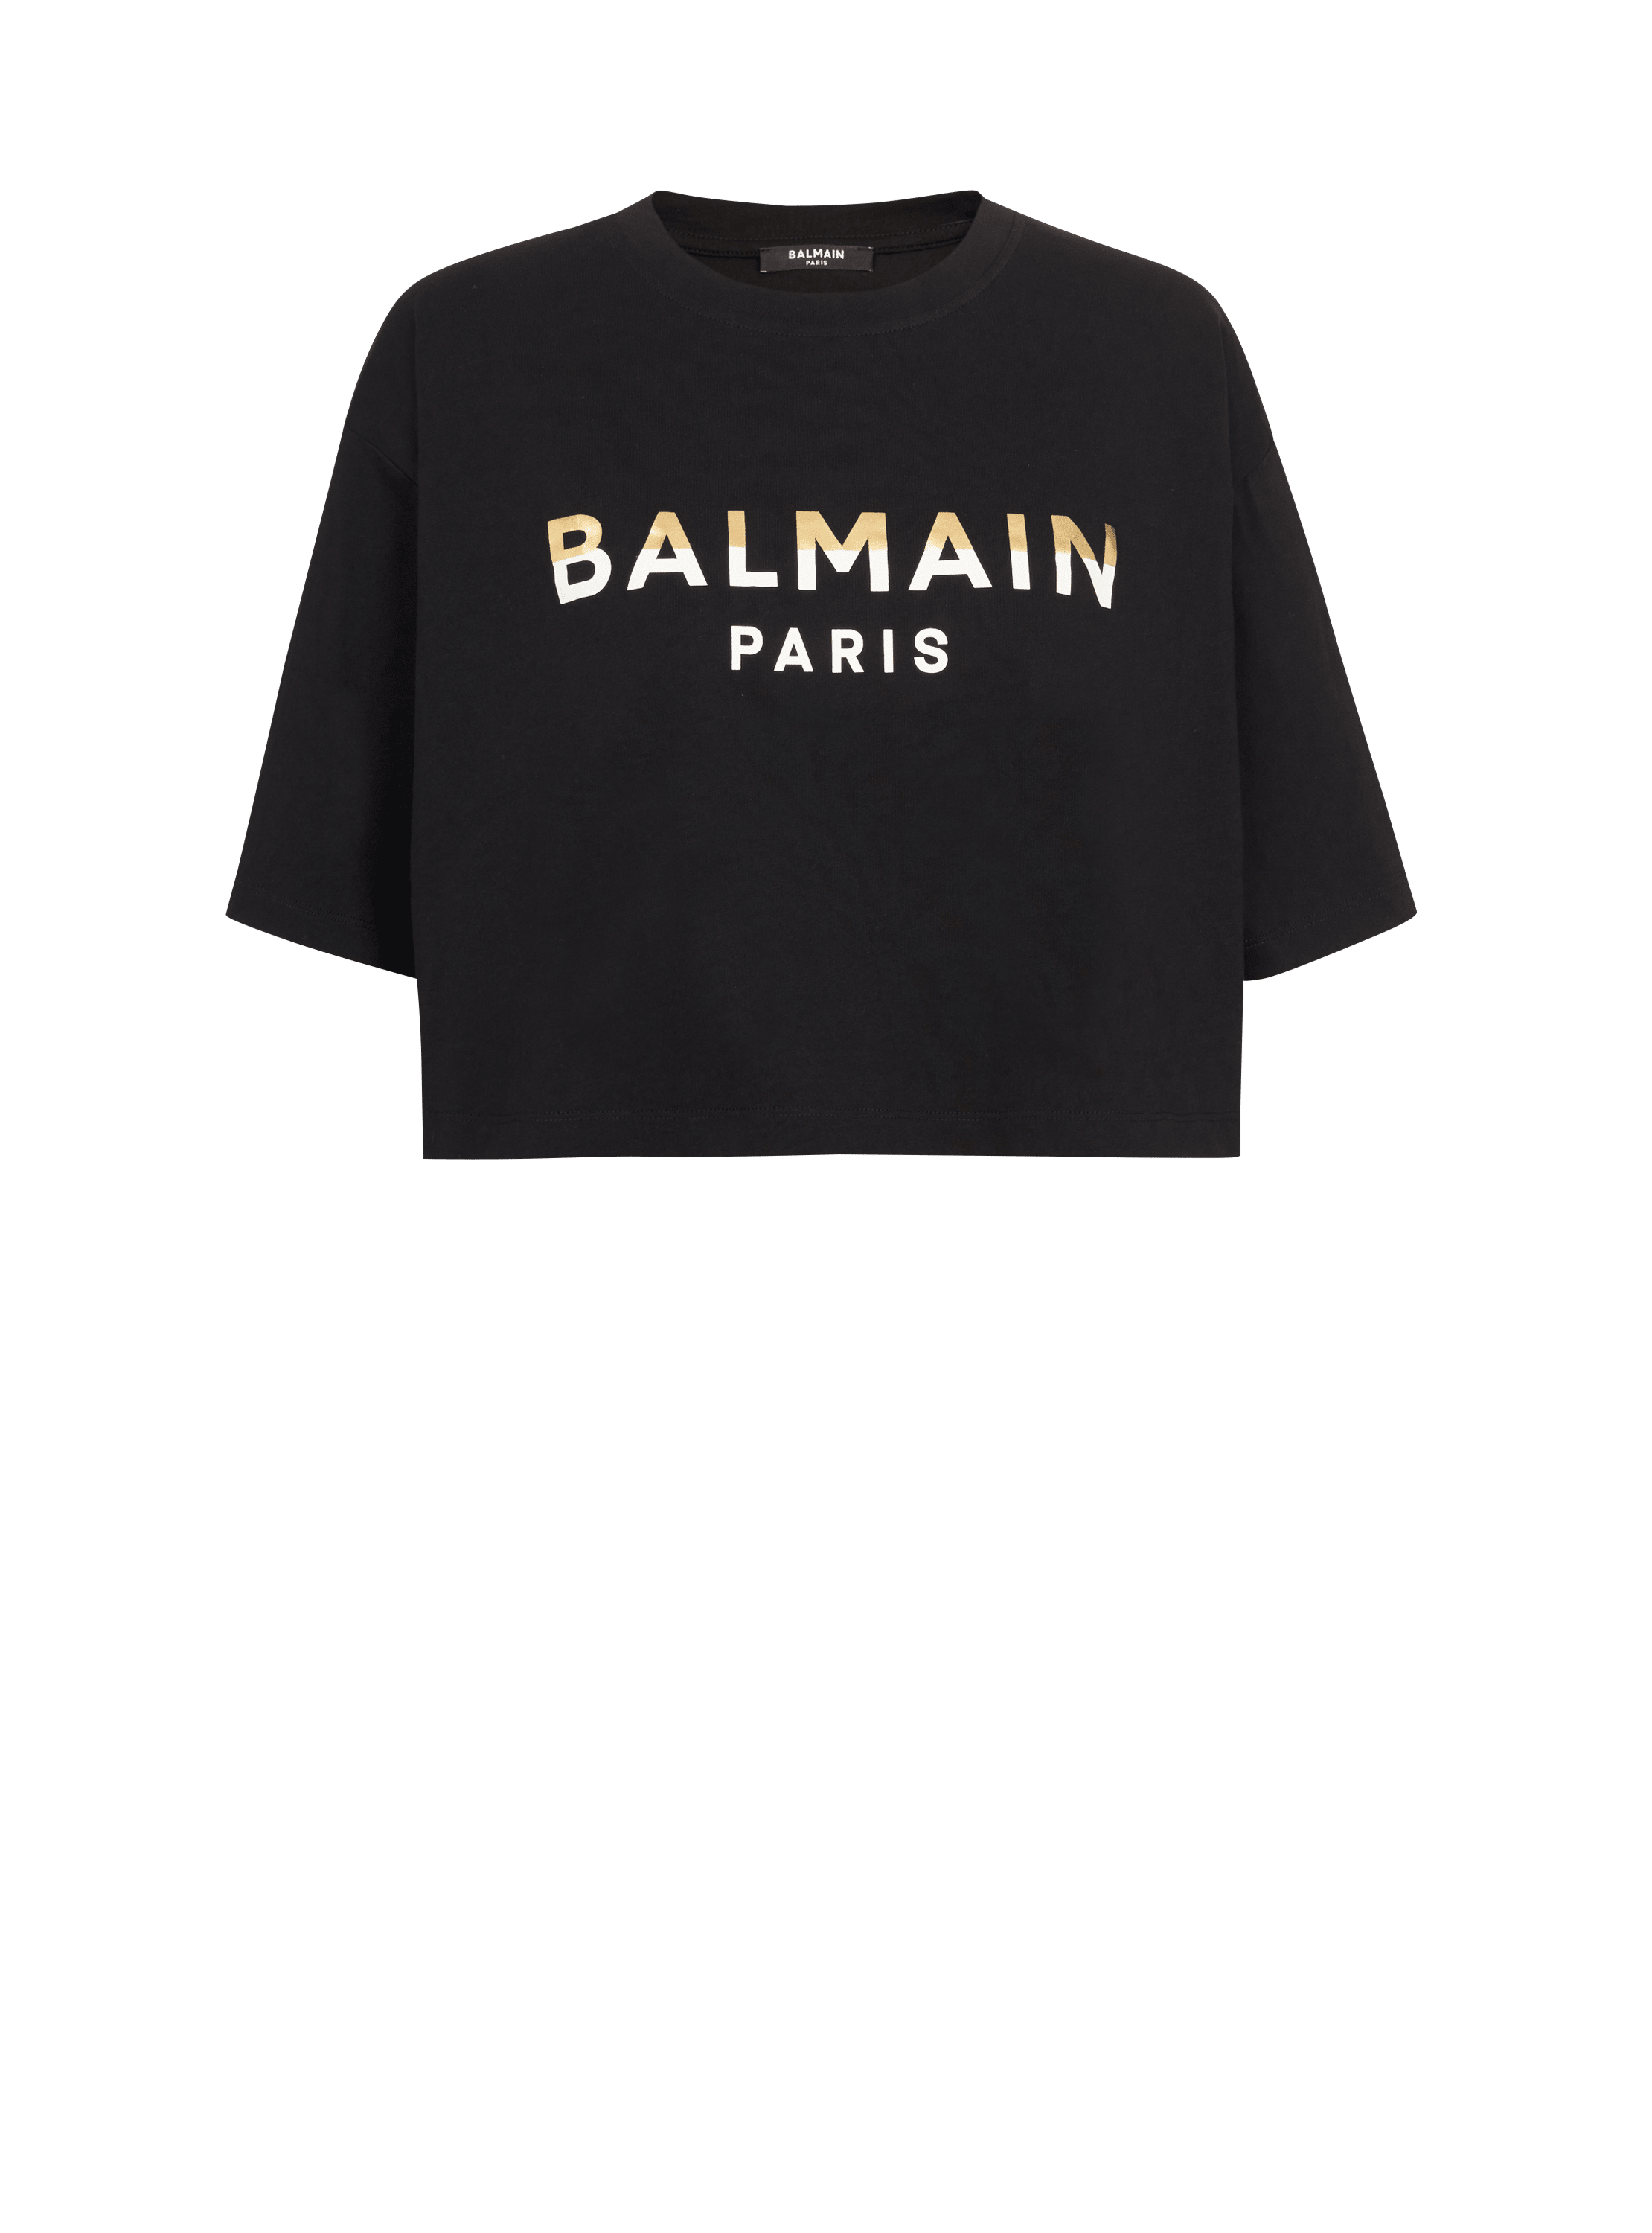 Balmain Paris短款T恤, black, hi-res